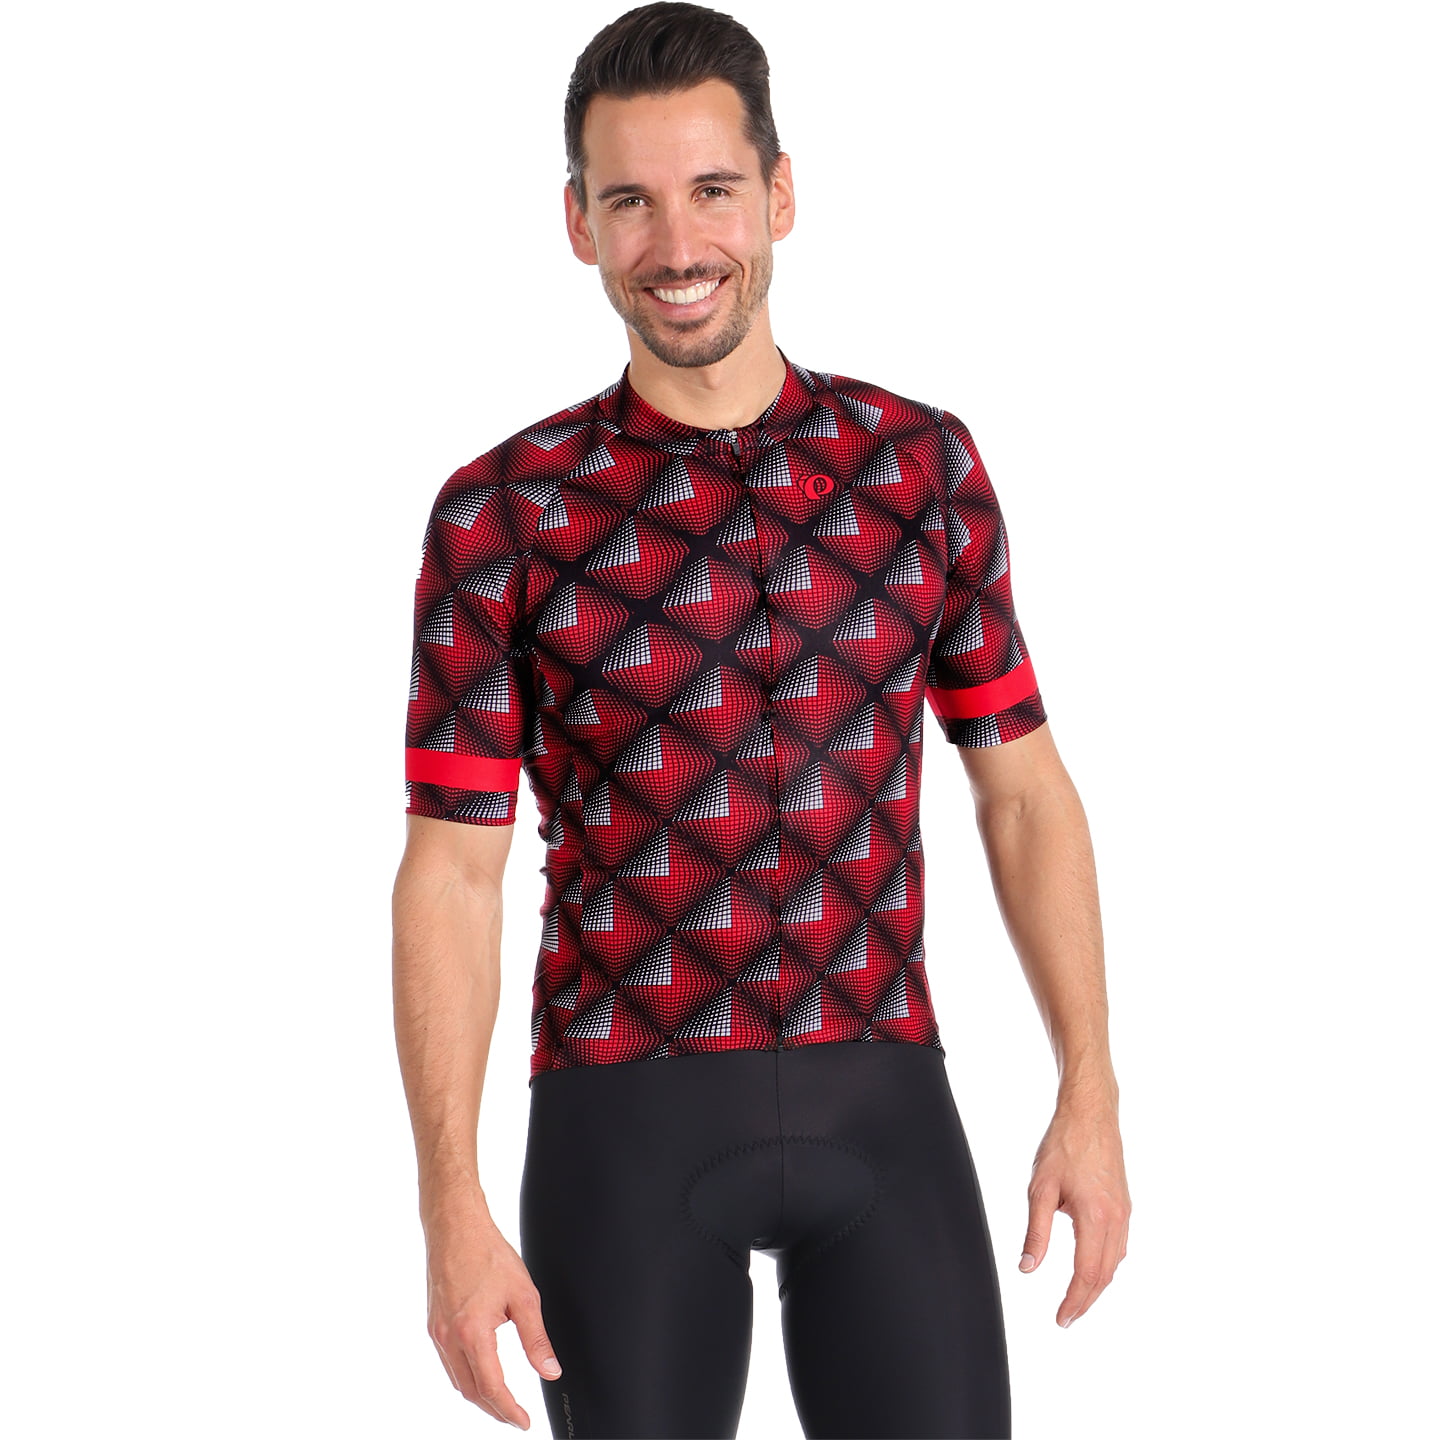 PEARL IZUMI Attack Short Sleeve Jersey Short Sleeve Jersey, for men, size XL, Cycling jersey, Cycle clothing